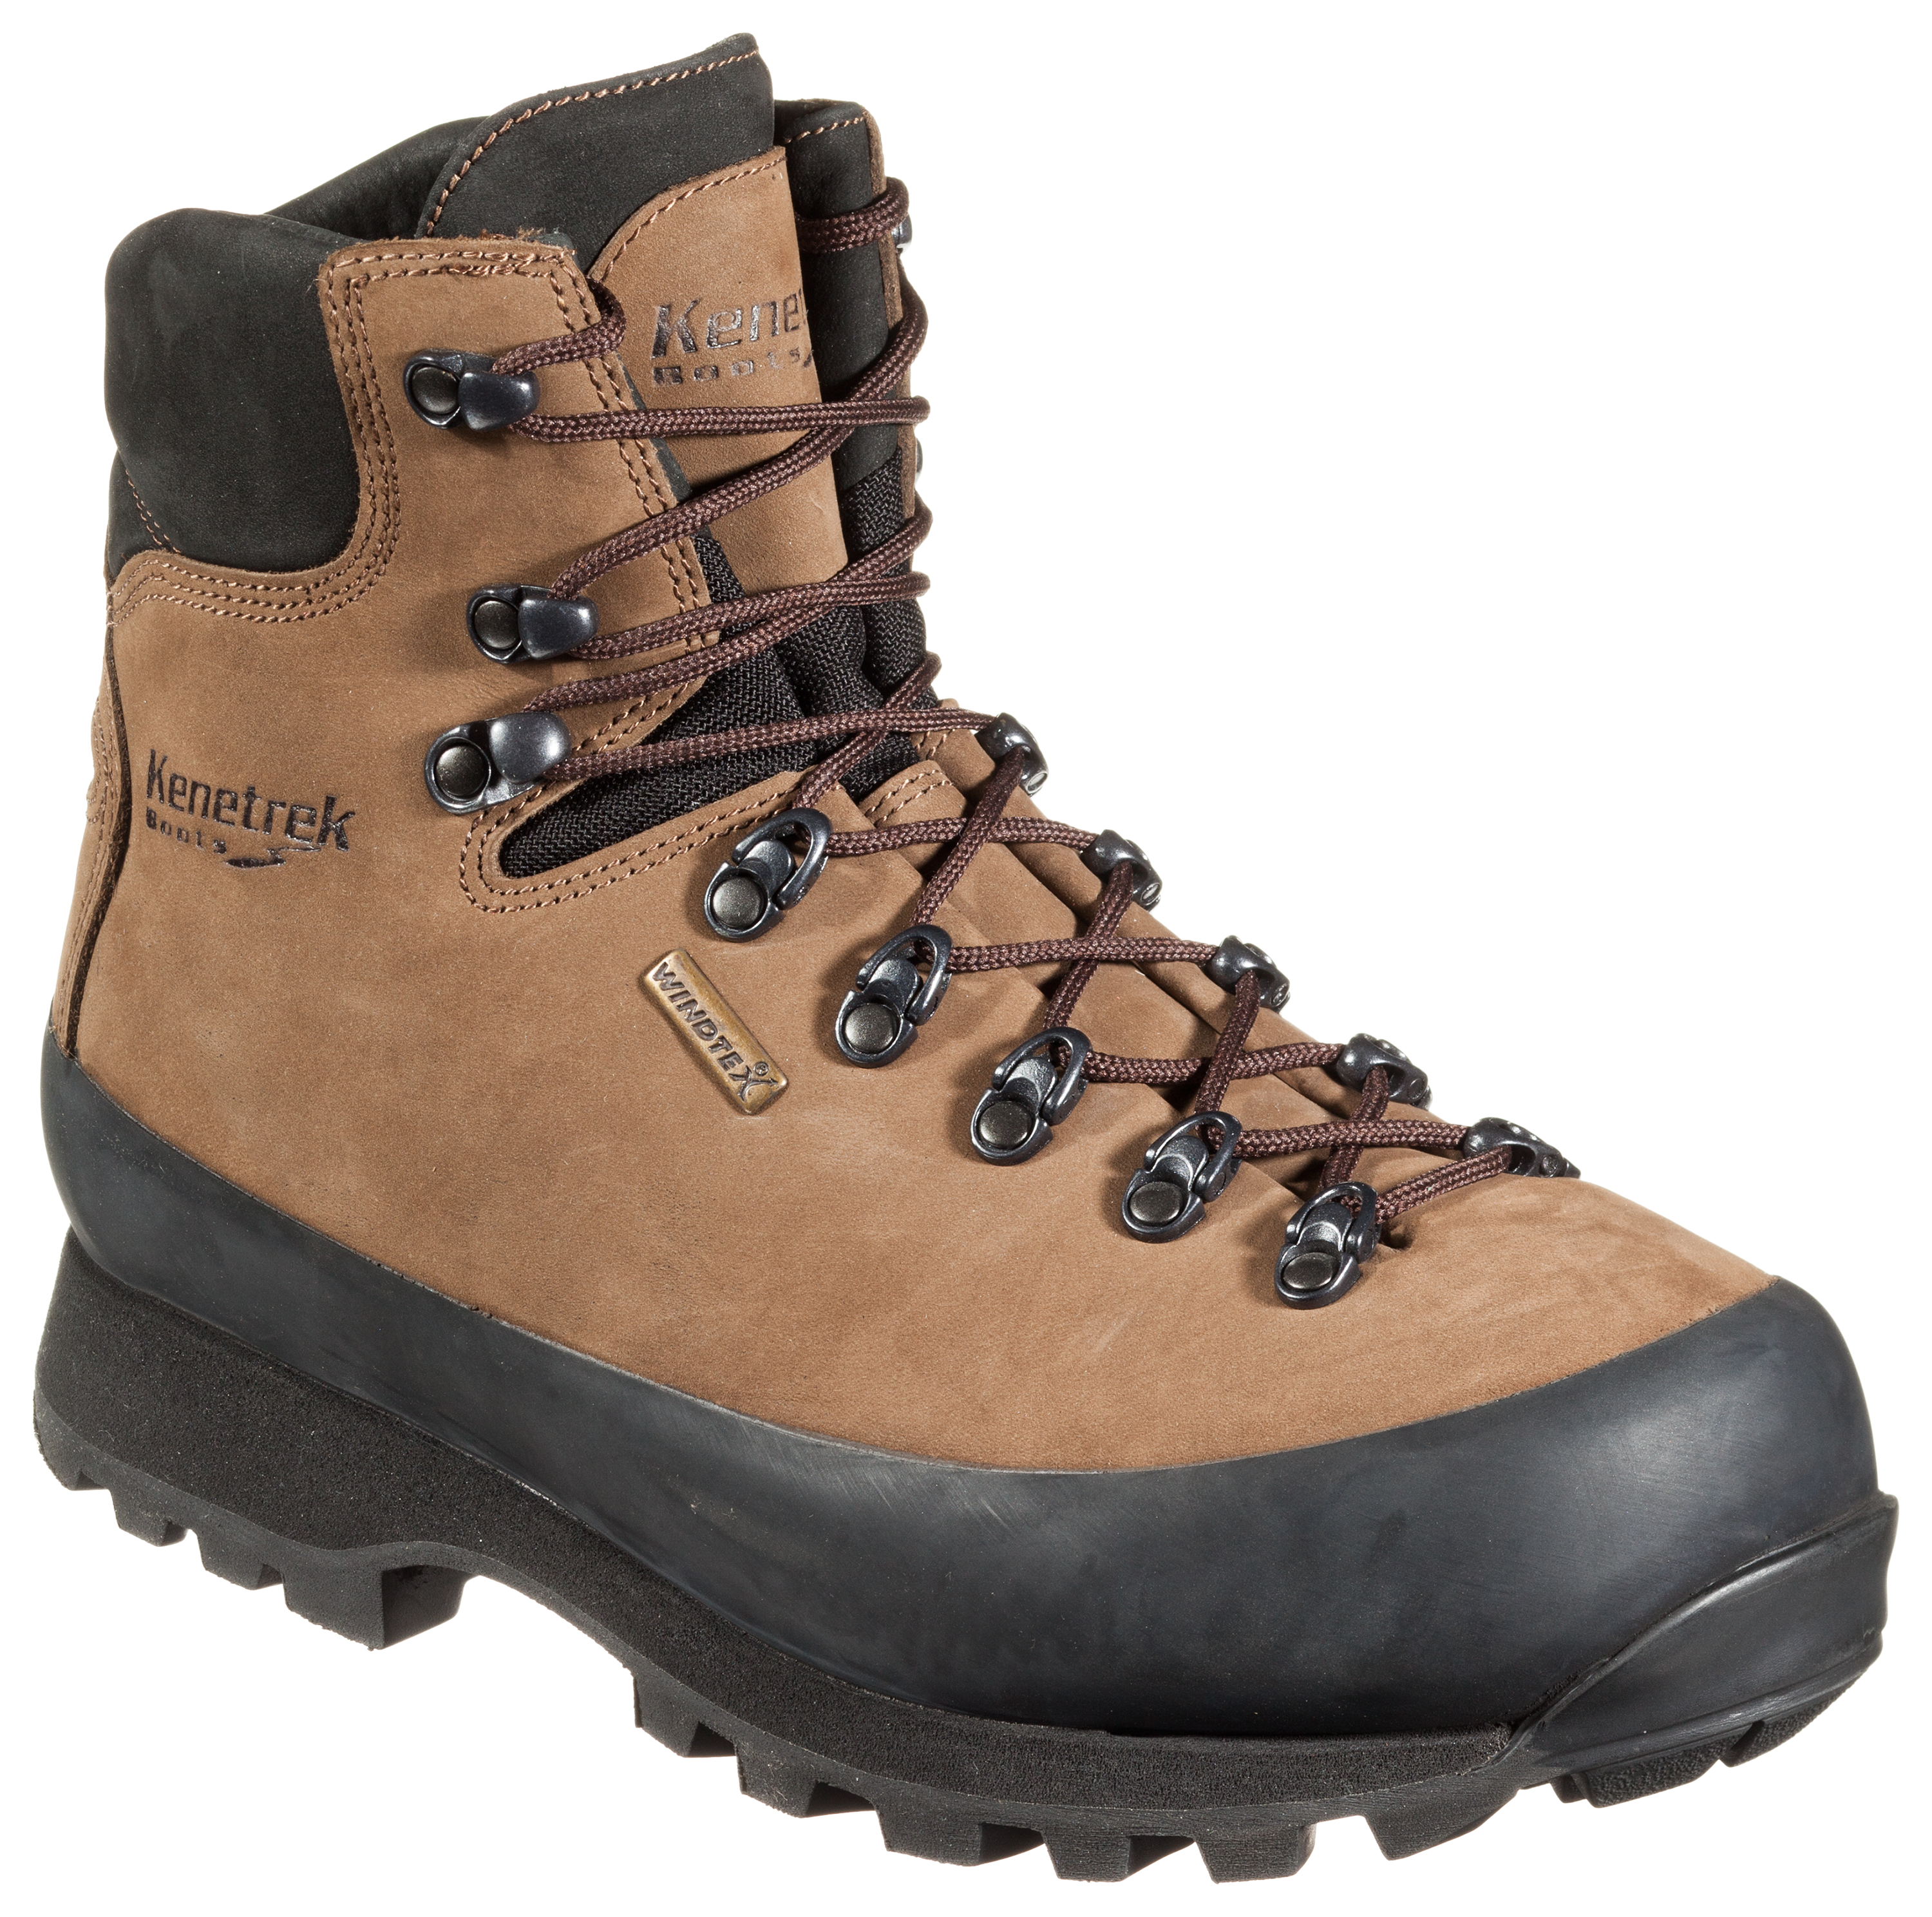 Kenetrek Hardscrabble Waterproof Hiking Boots for Men - Brown - 12M